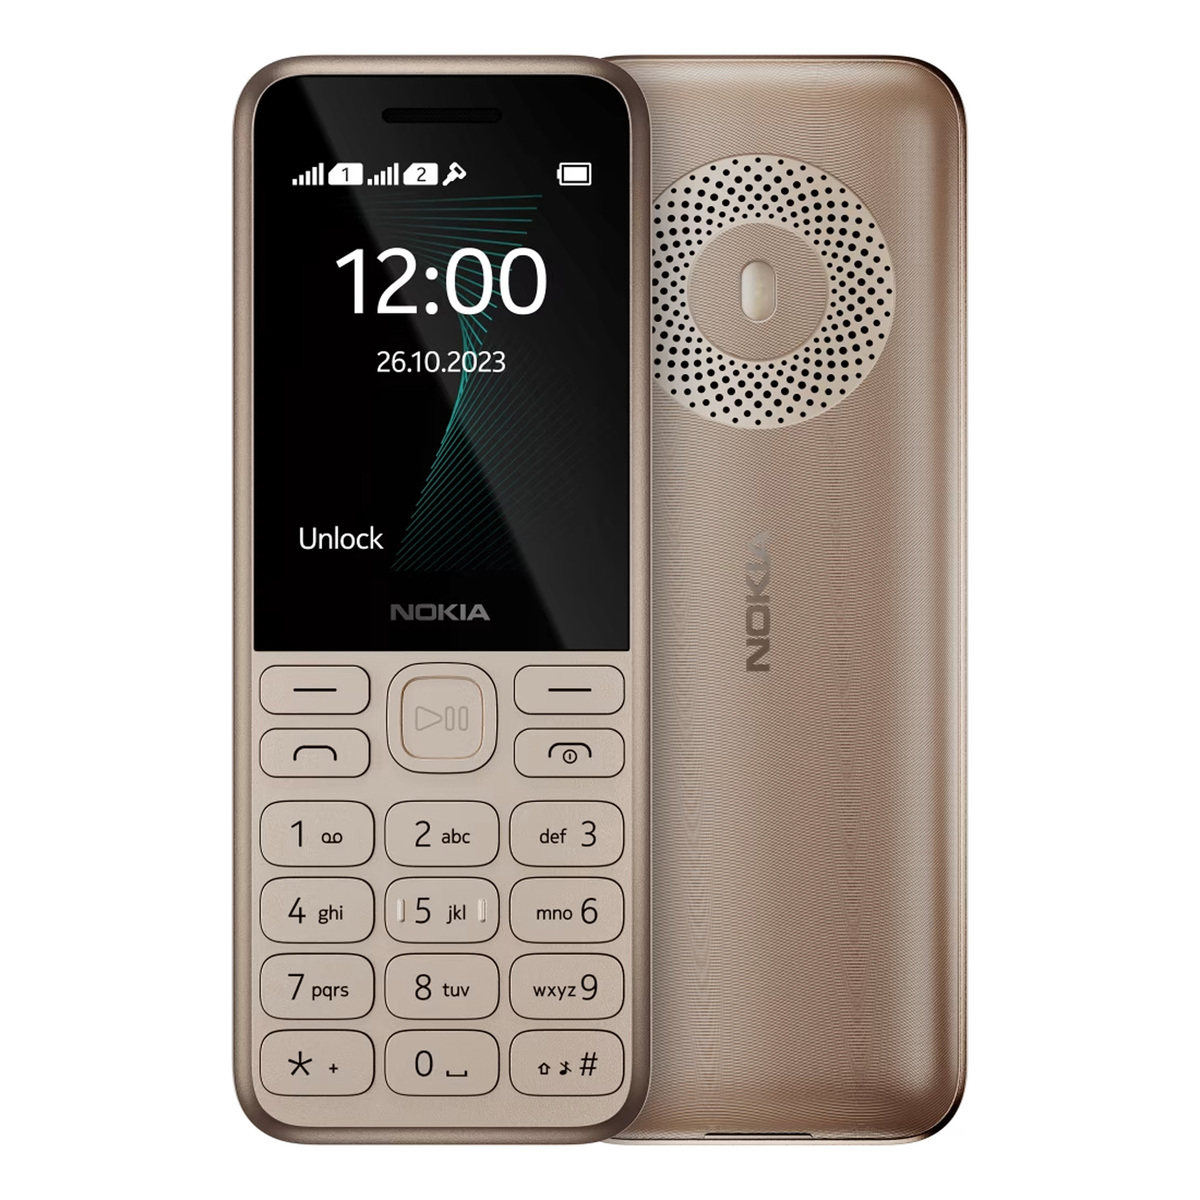 Nokia 130 M Dual SIM Feature Phone, Light Gold, TA-1576